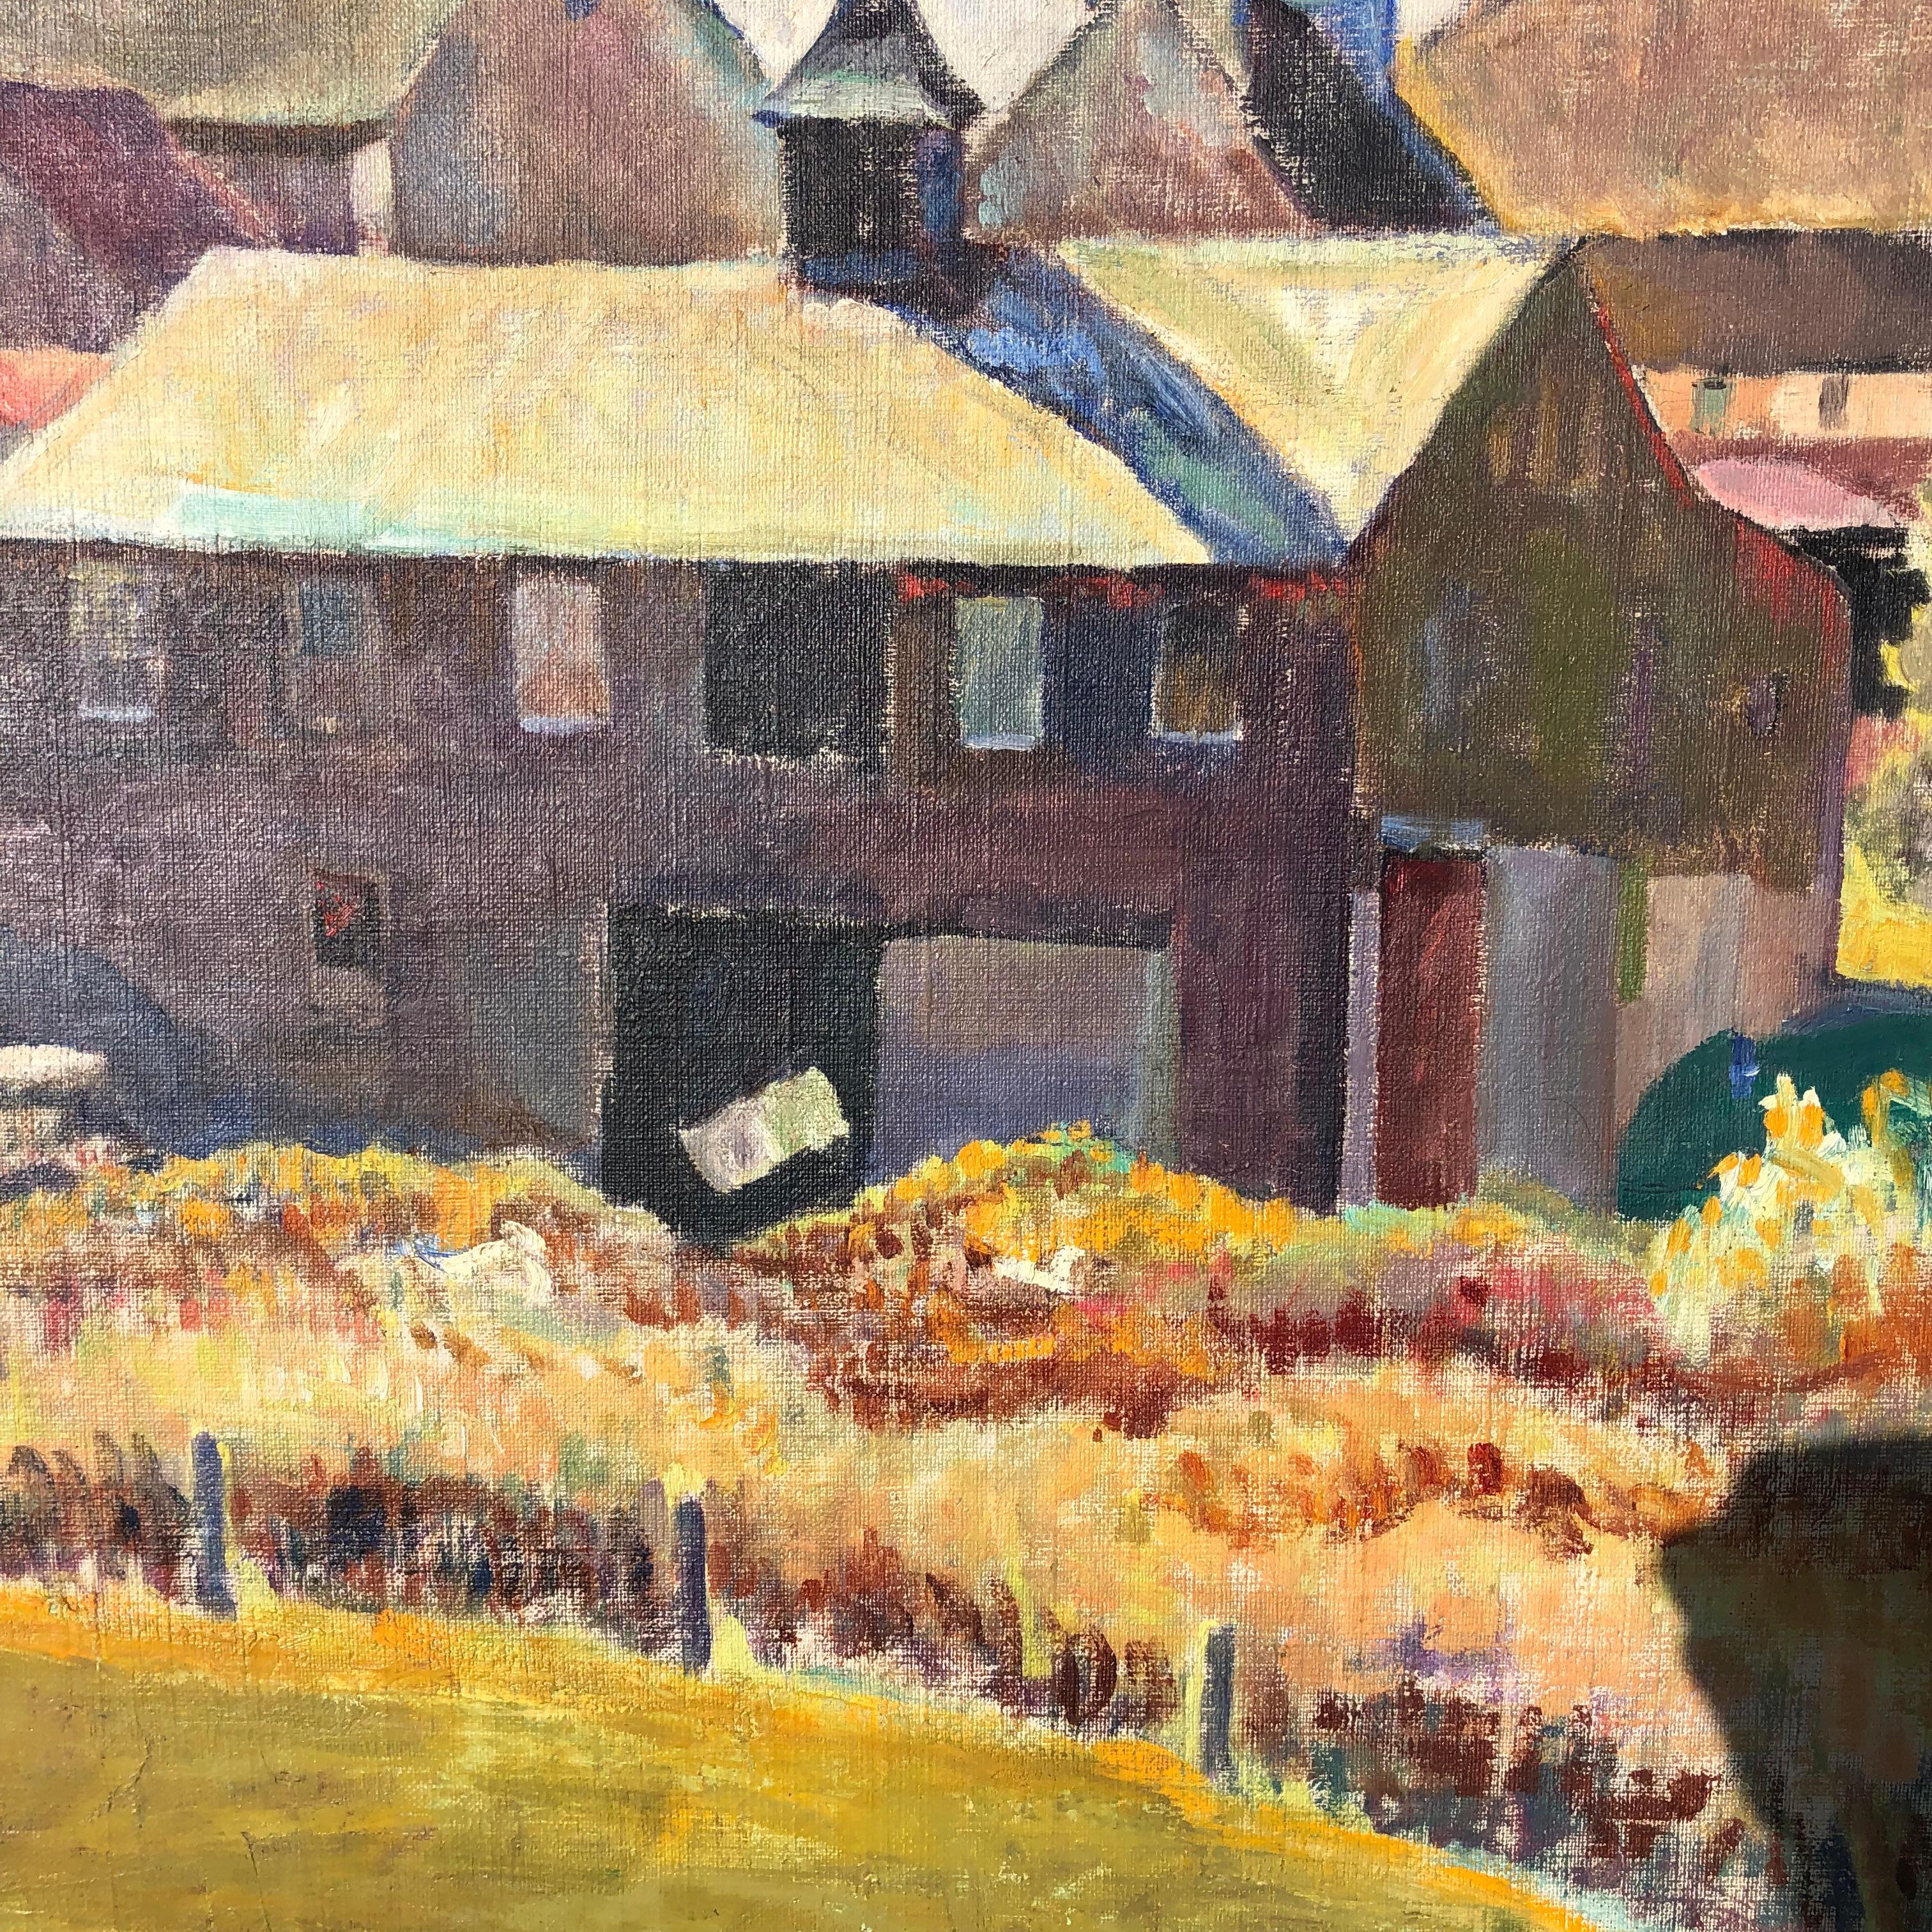 1920s Pennsylvania Farm Scene - Bucks Co / Chester Co  School  - Post-Impressionist Painting by Marion Butler Ewald